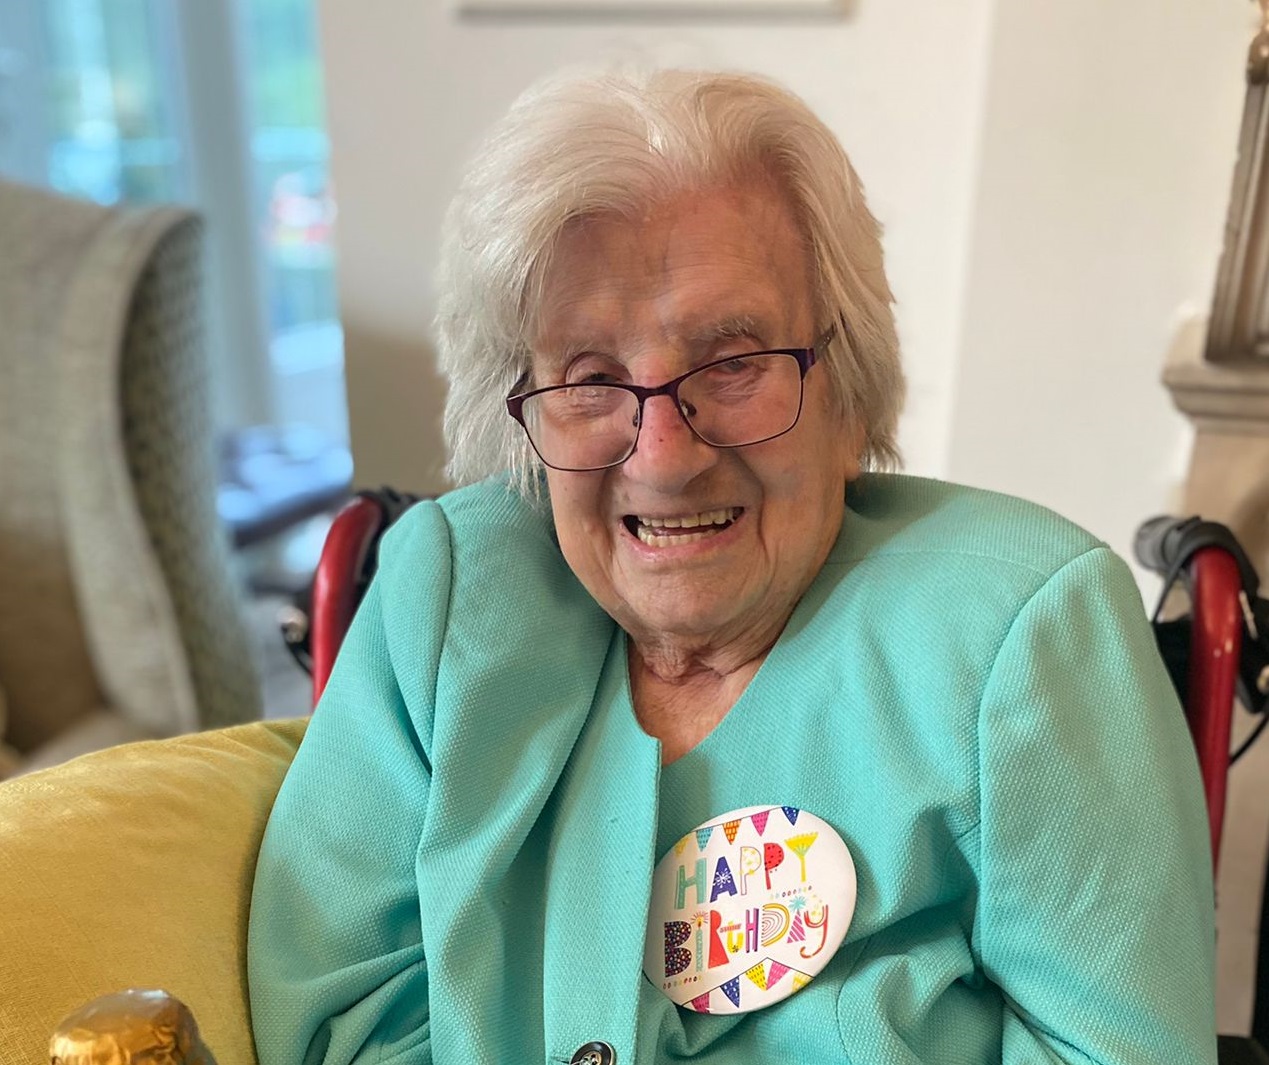 Care home celebrates Roma’s 101st birthday – South London News